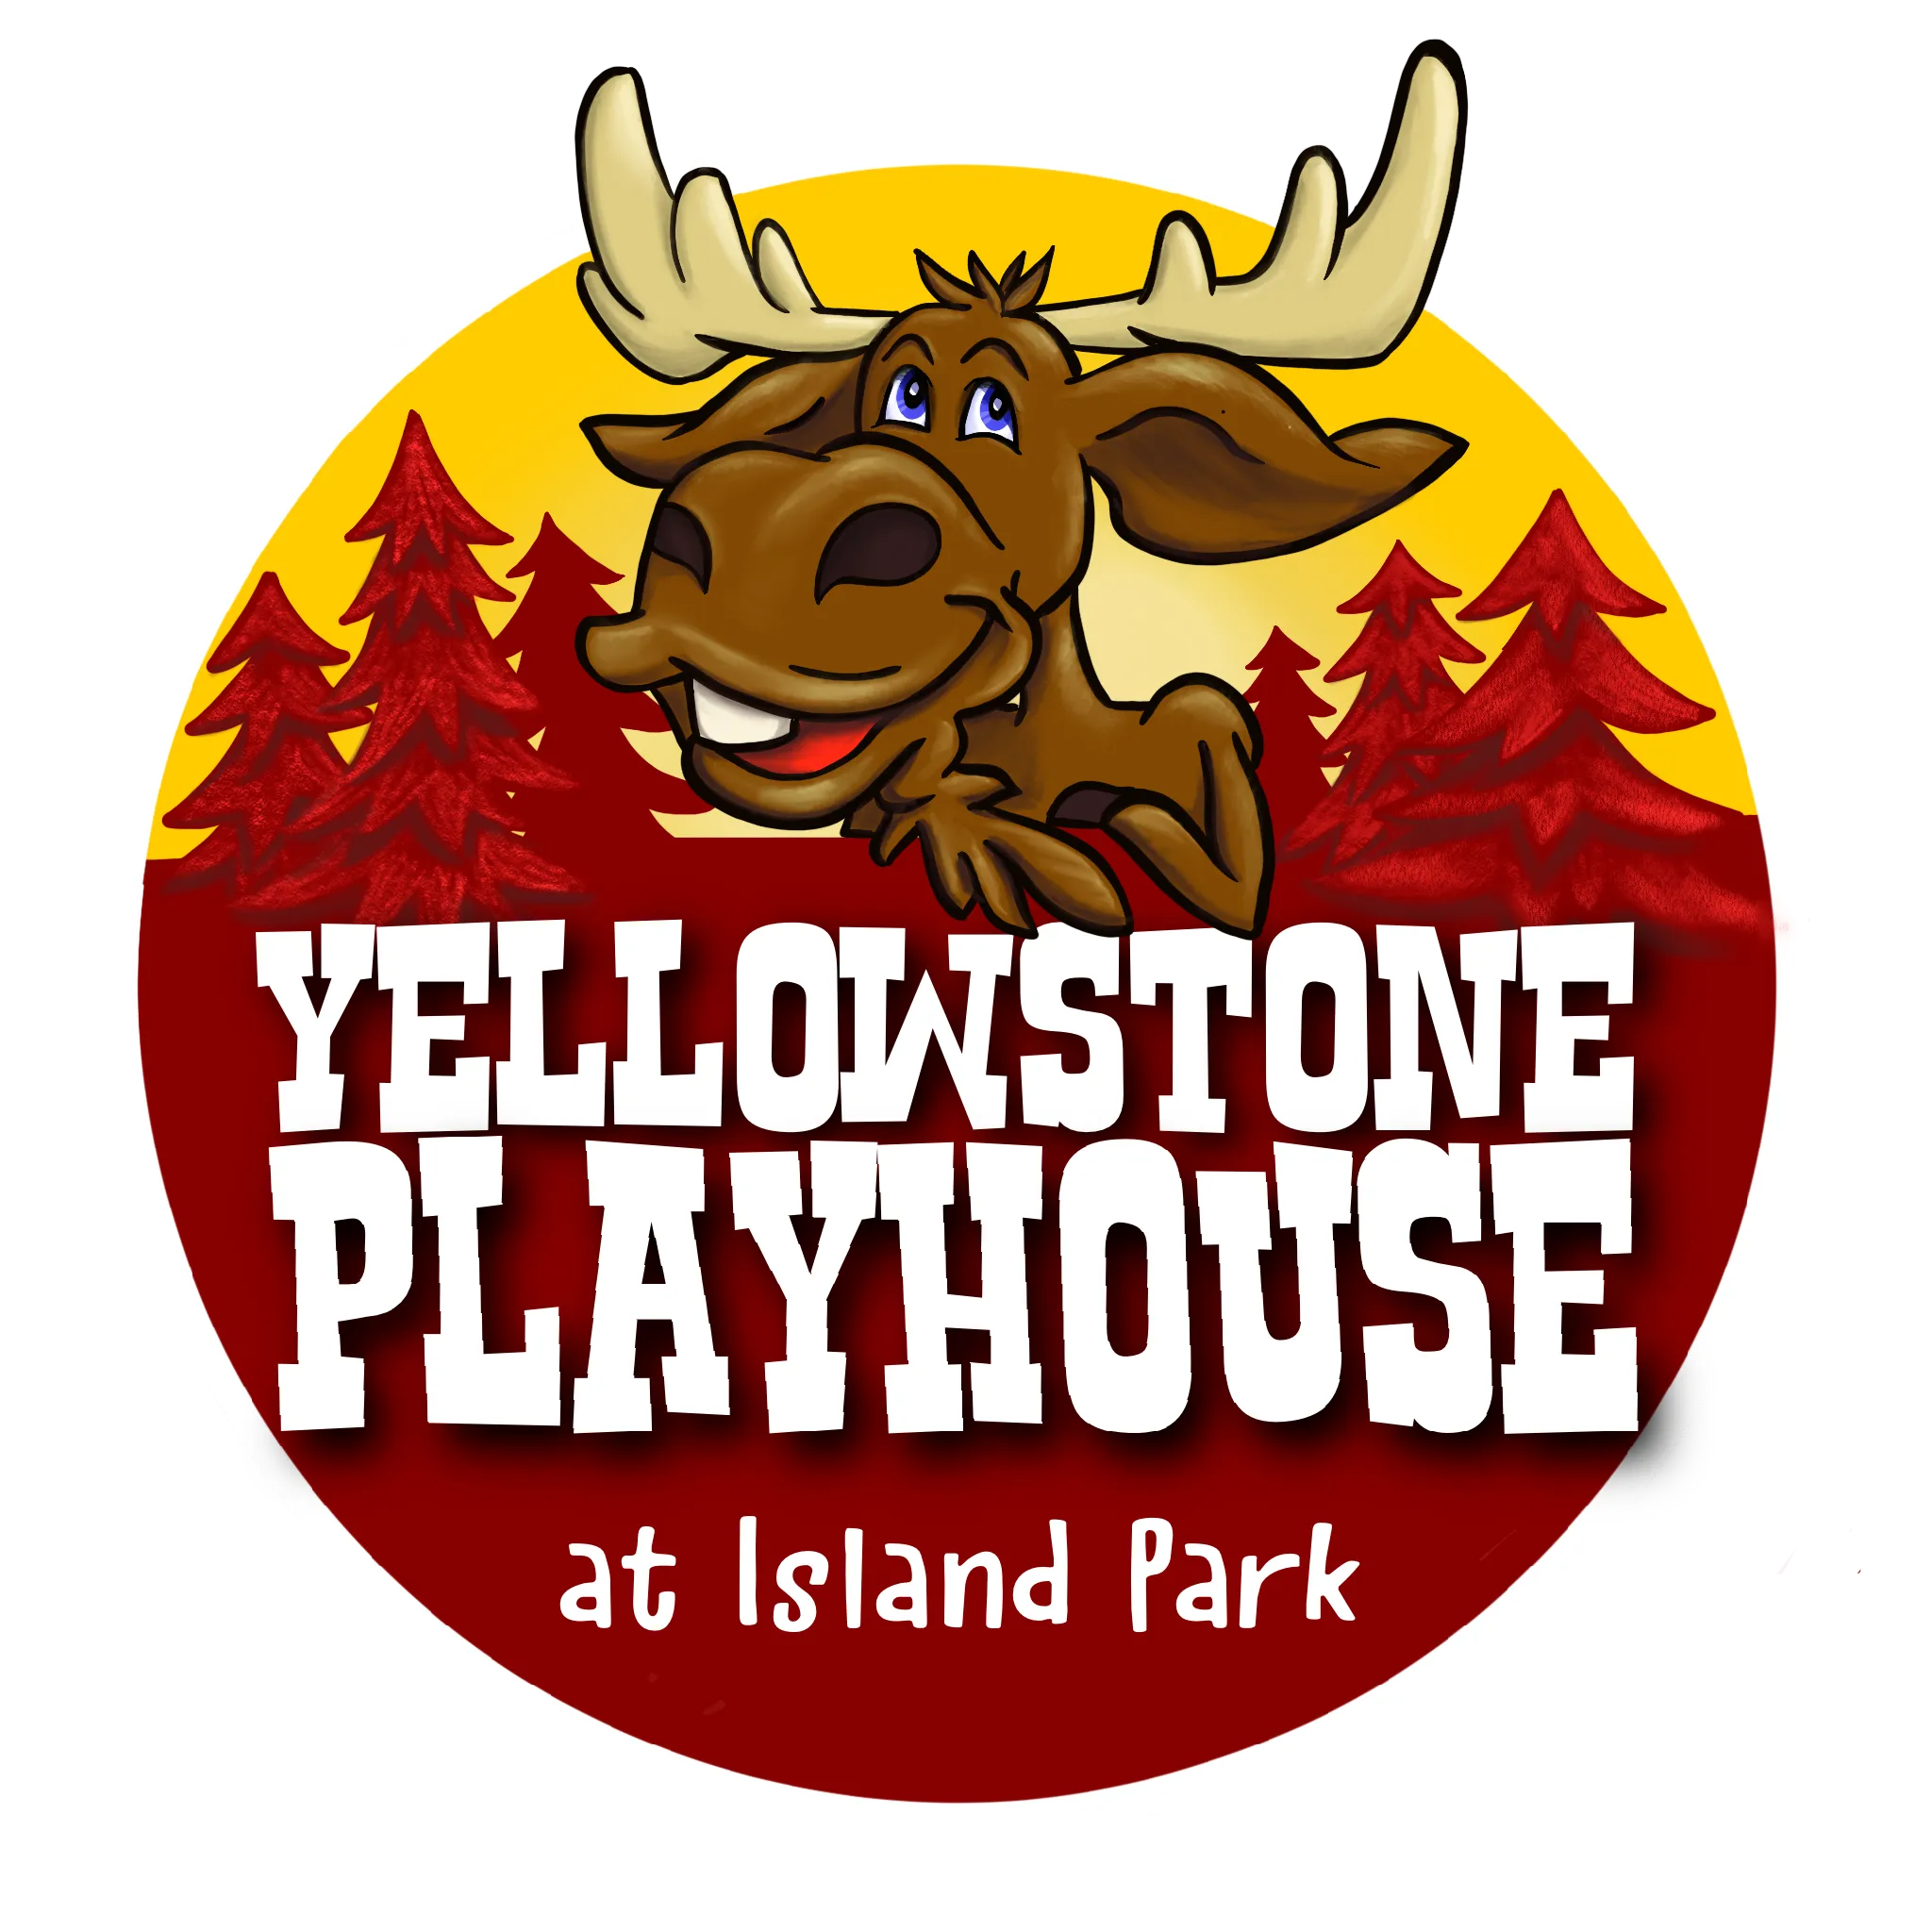 Yellowstone Playhouse Discount Code